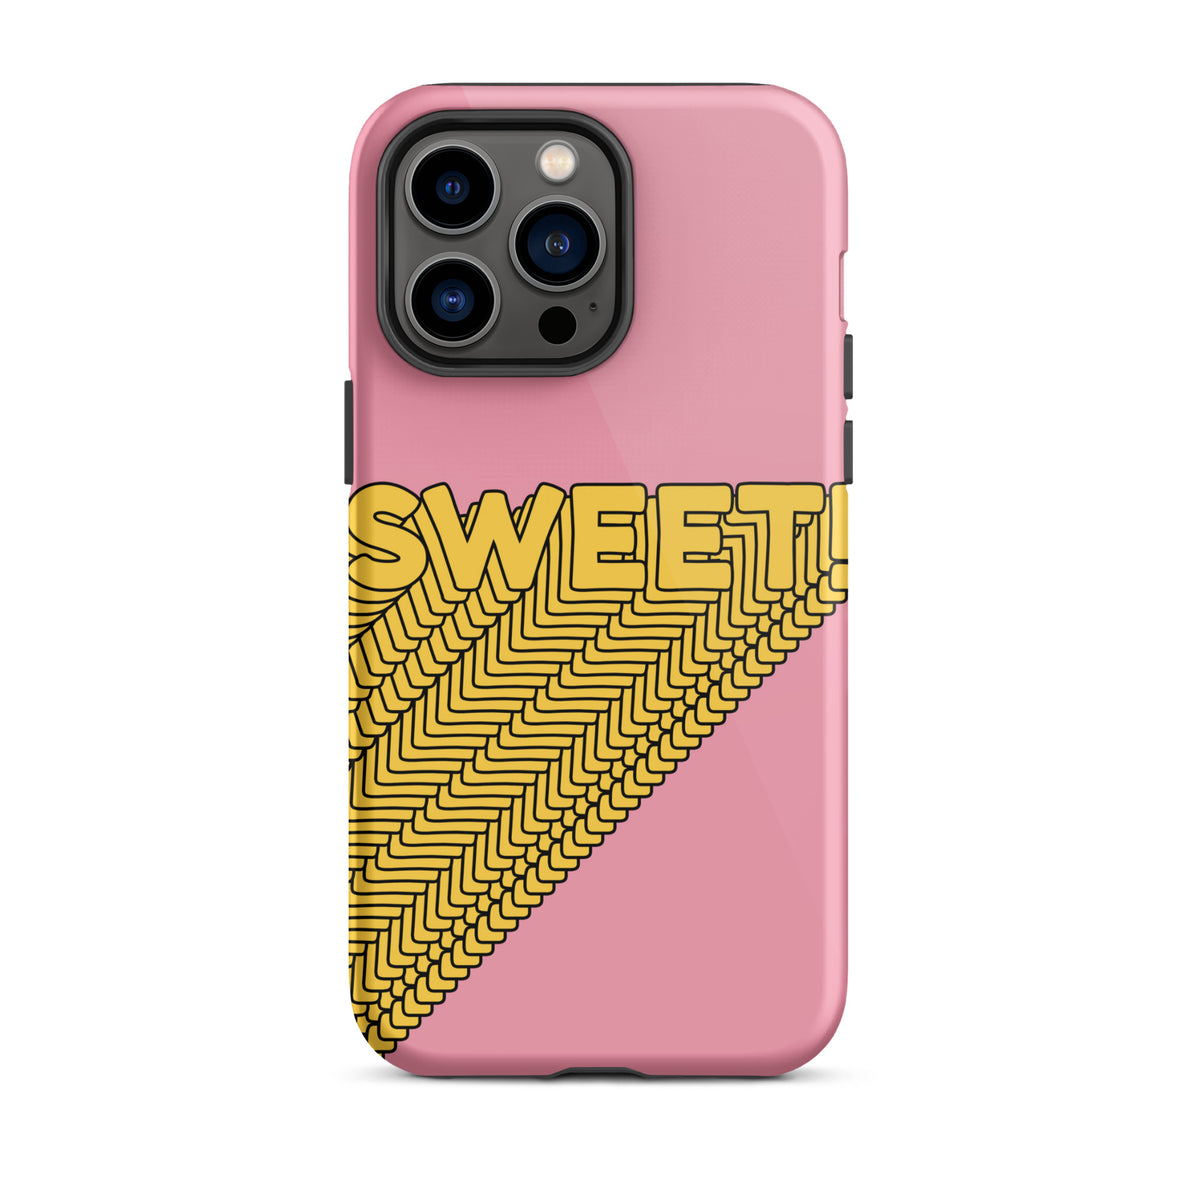 Sweet iphone case